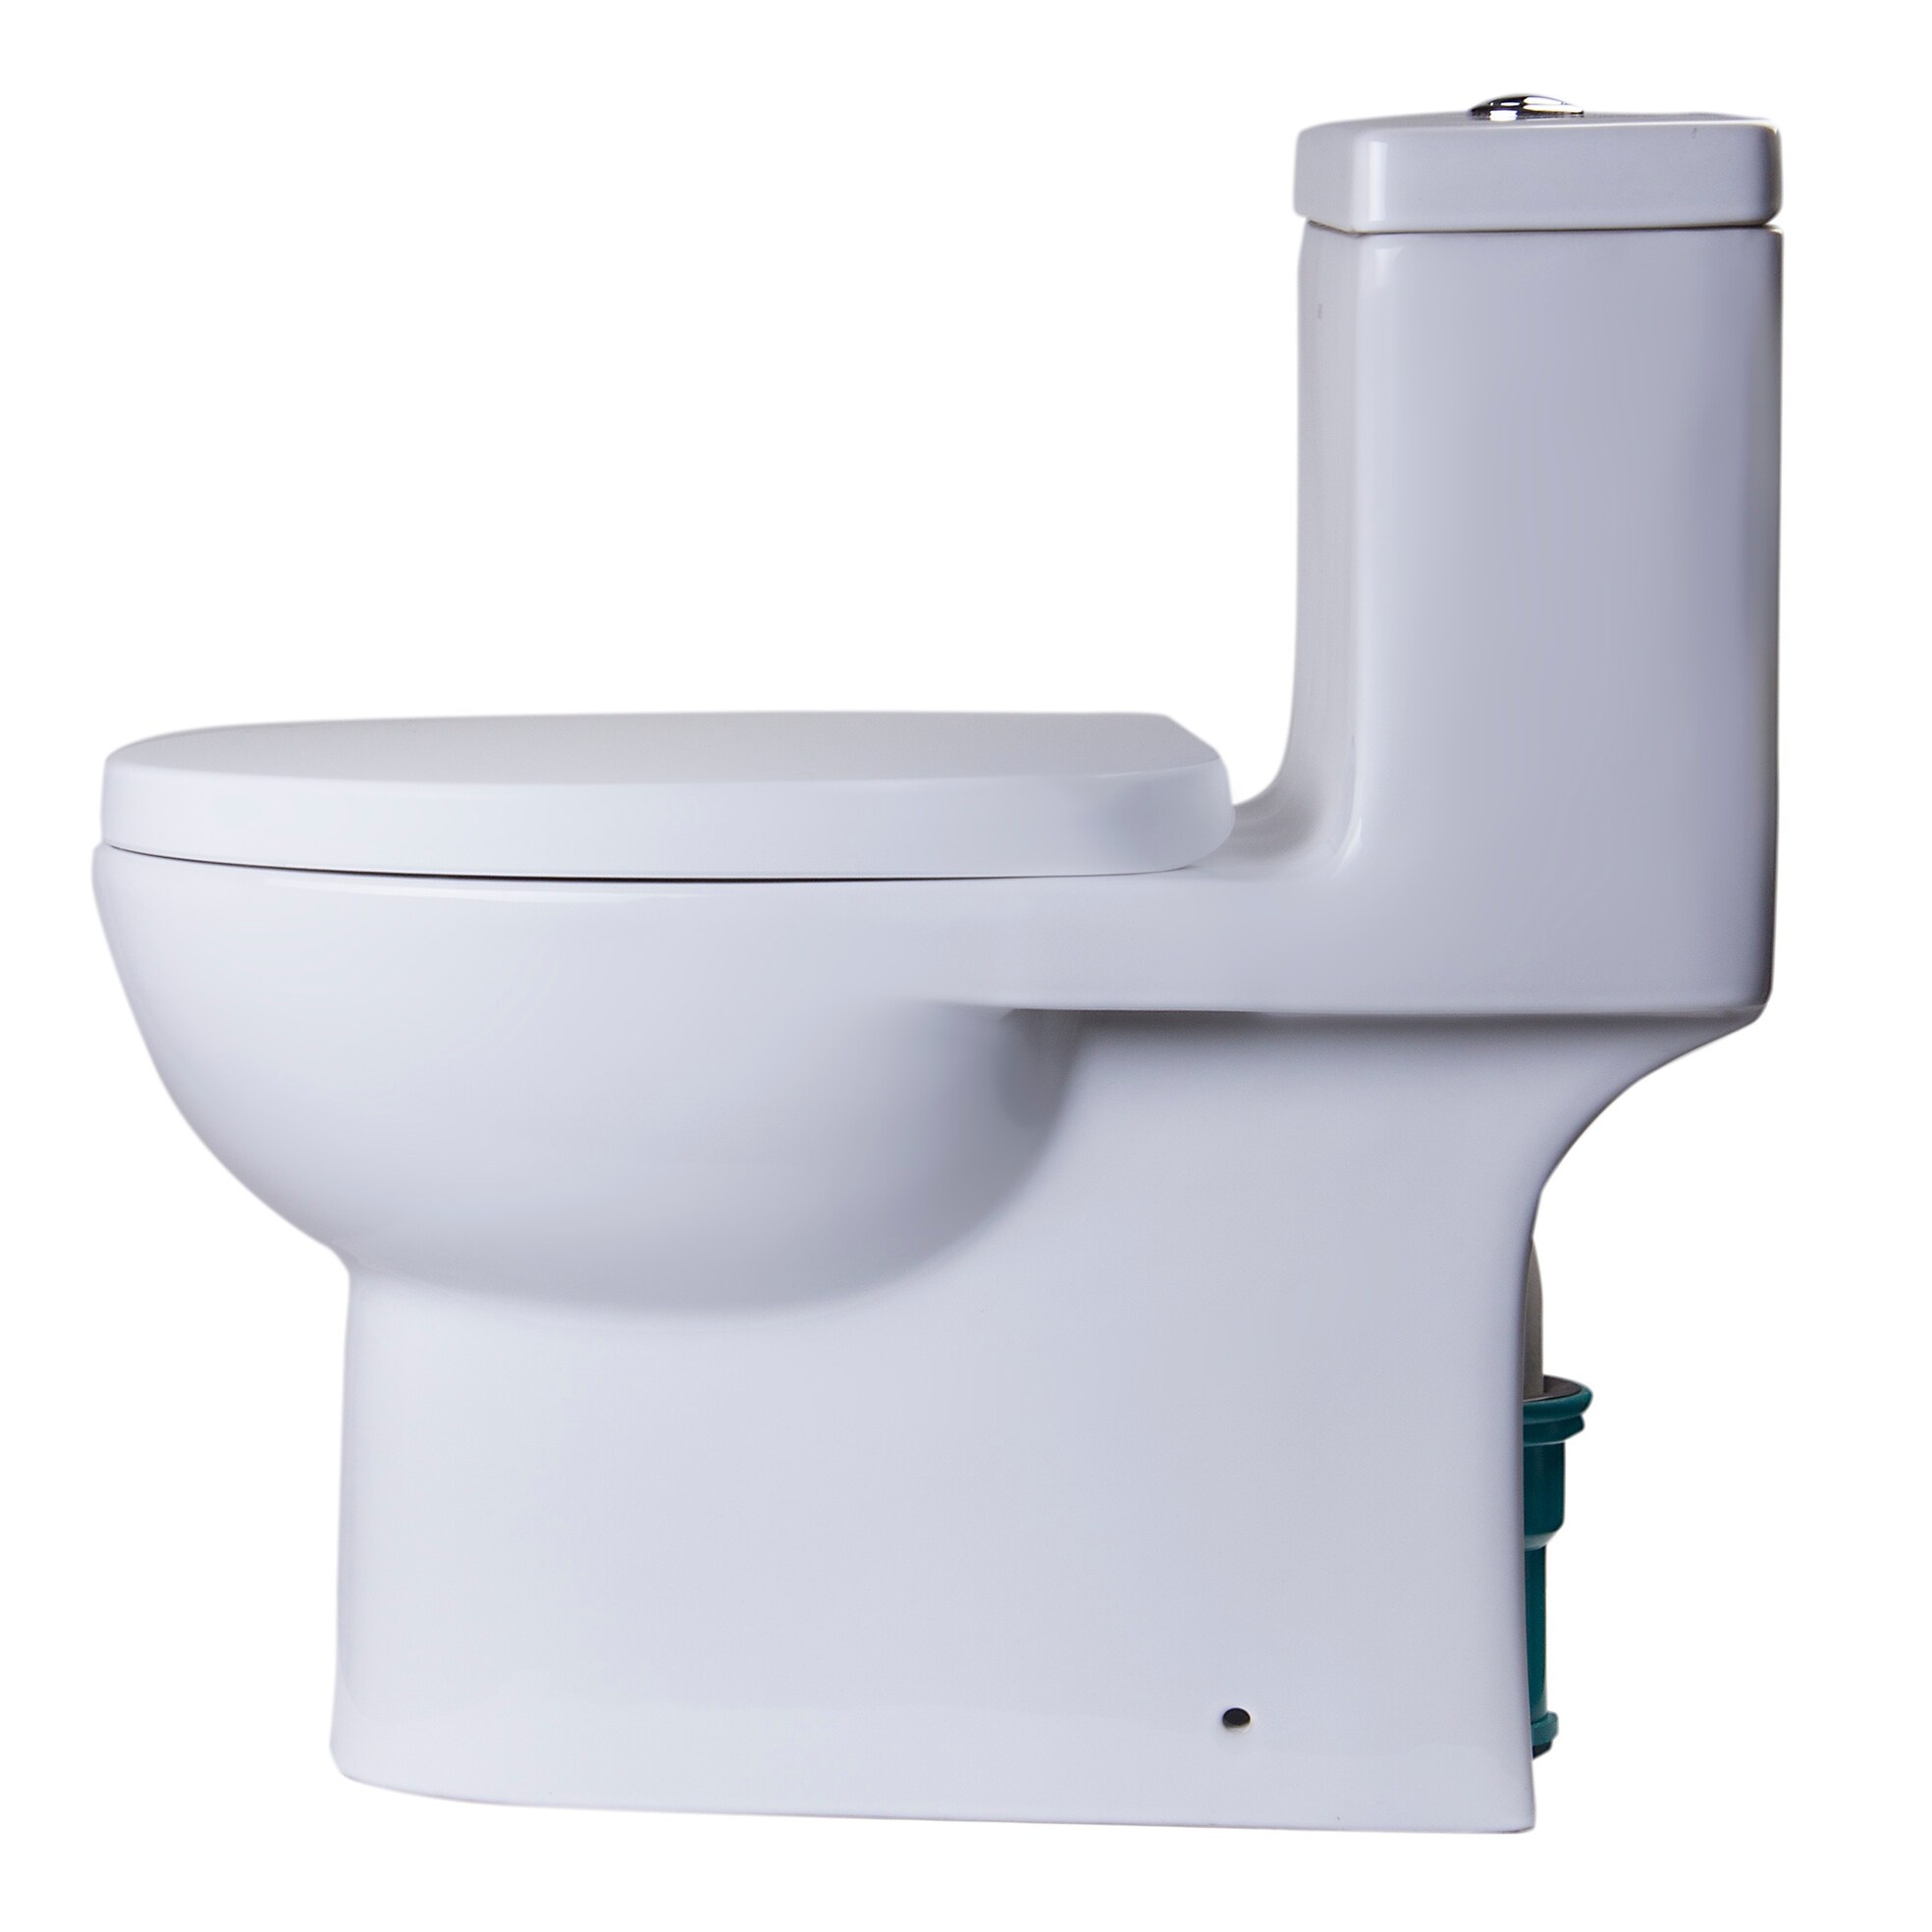 EAGO TB359 White Porcelain Dual Flush One Piece Eco-friendly High Efficiency Low Flush Toilet